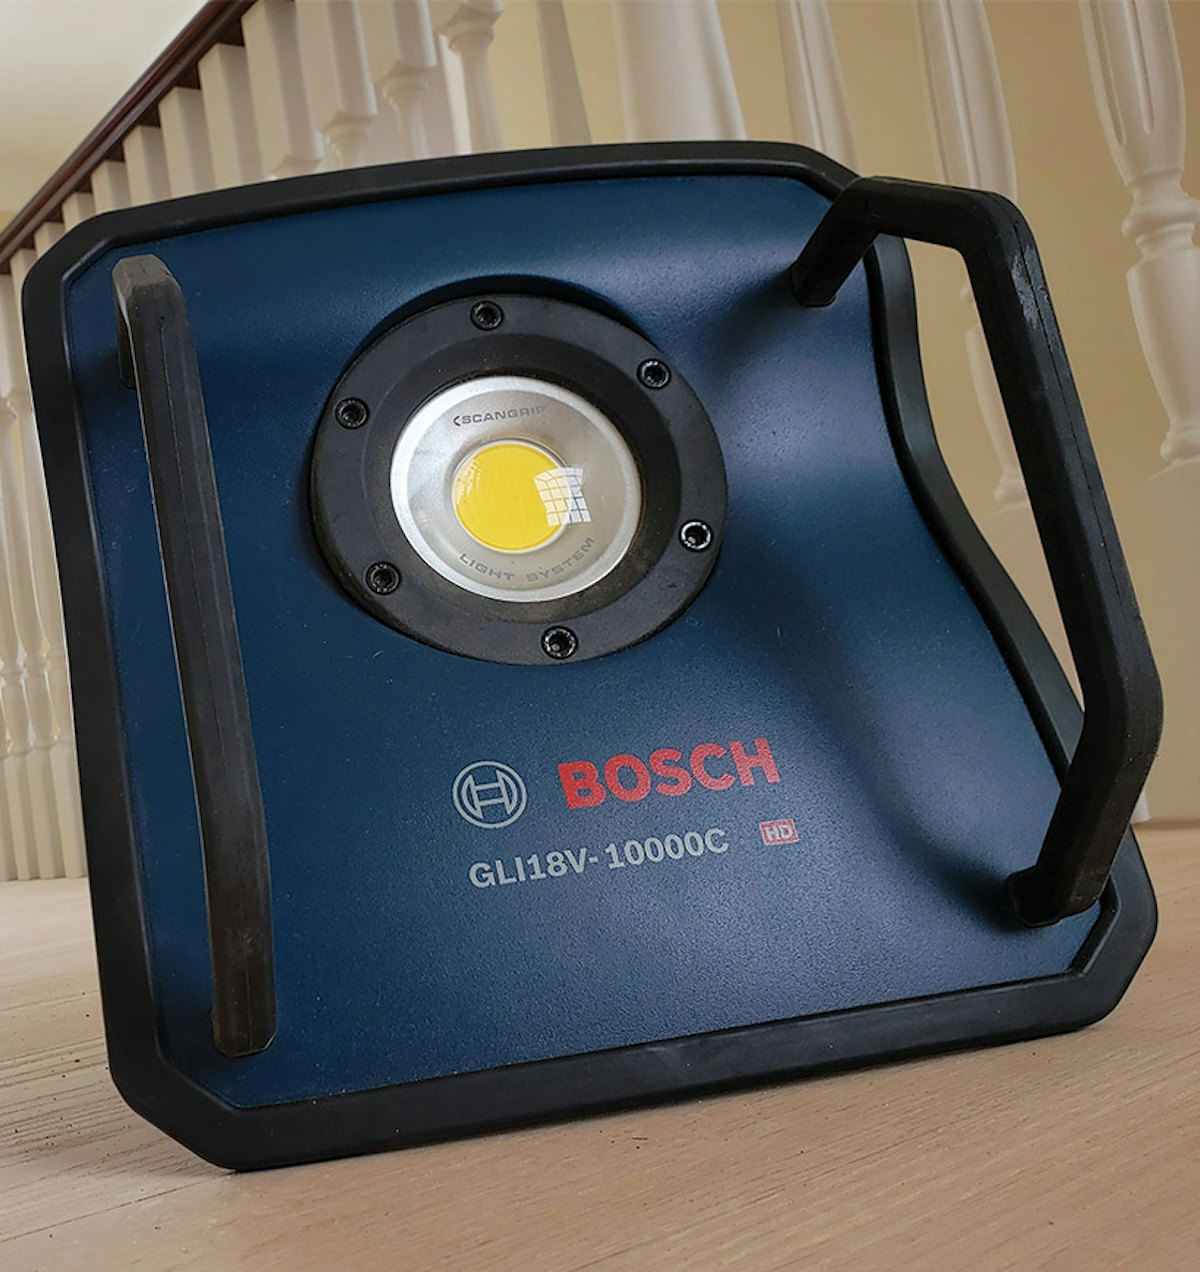 Tool Review: Cordless Bosch Floodlight Wood Floor | GLI-18V-10000C Business